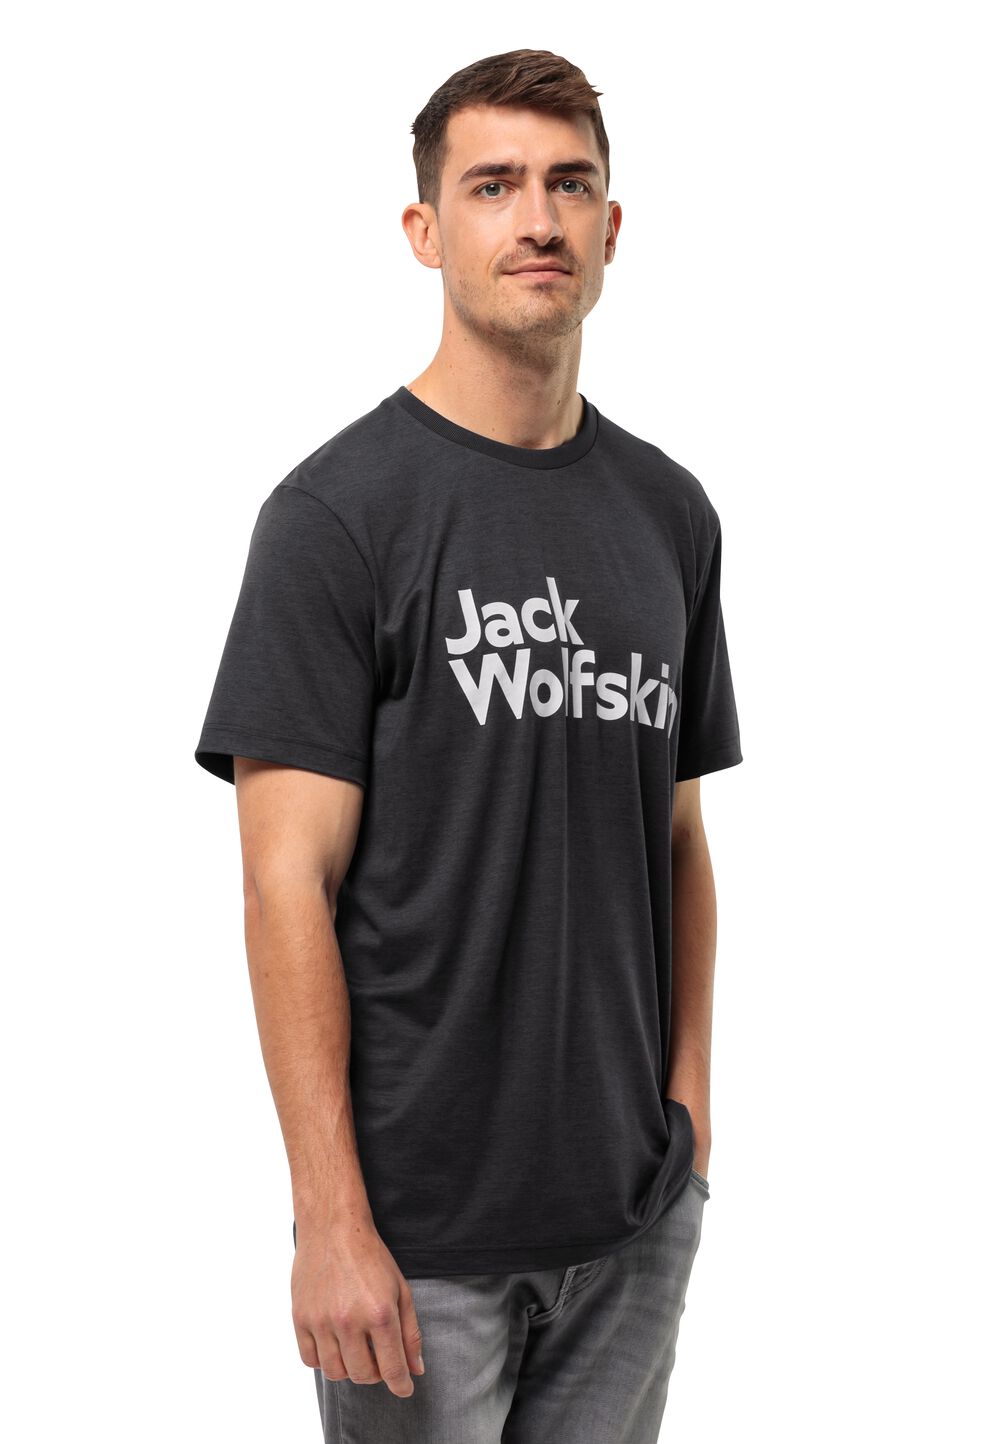 Jack Wolfskin Brand T-Shirt Men Functioneel shirt Heren S zwart black